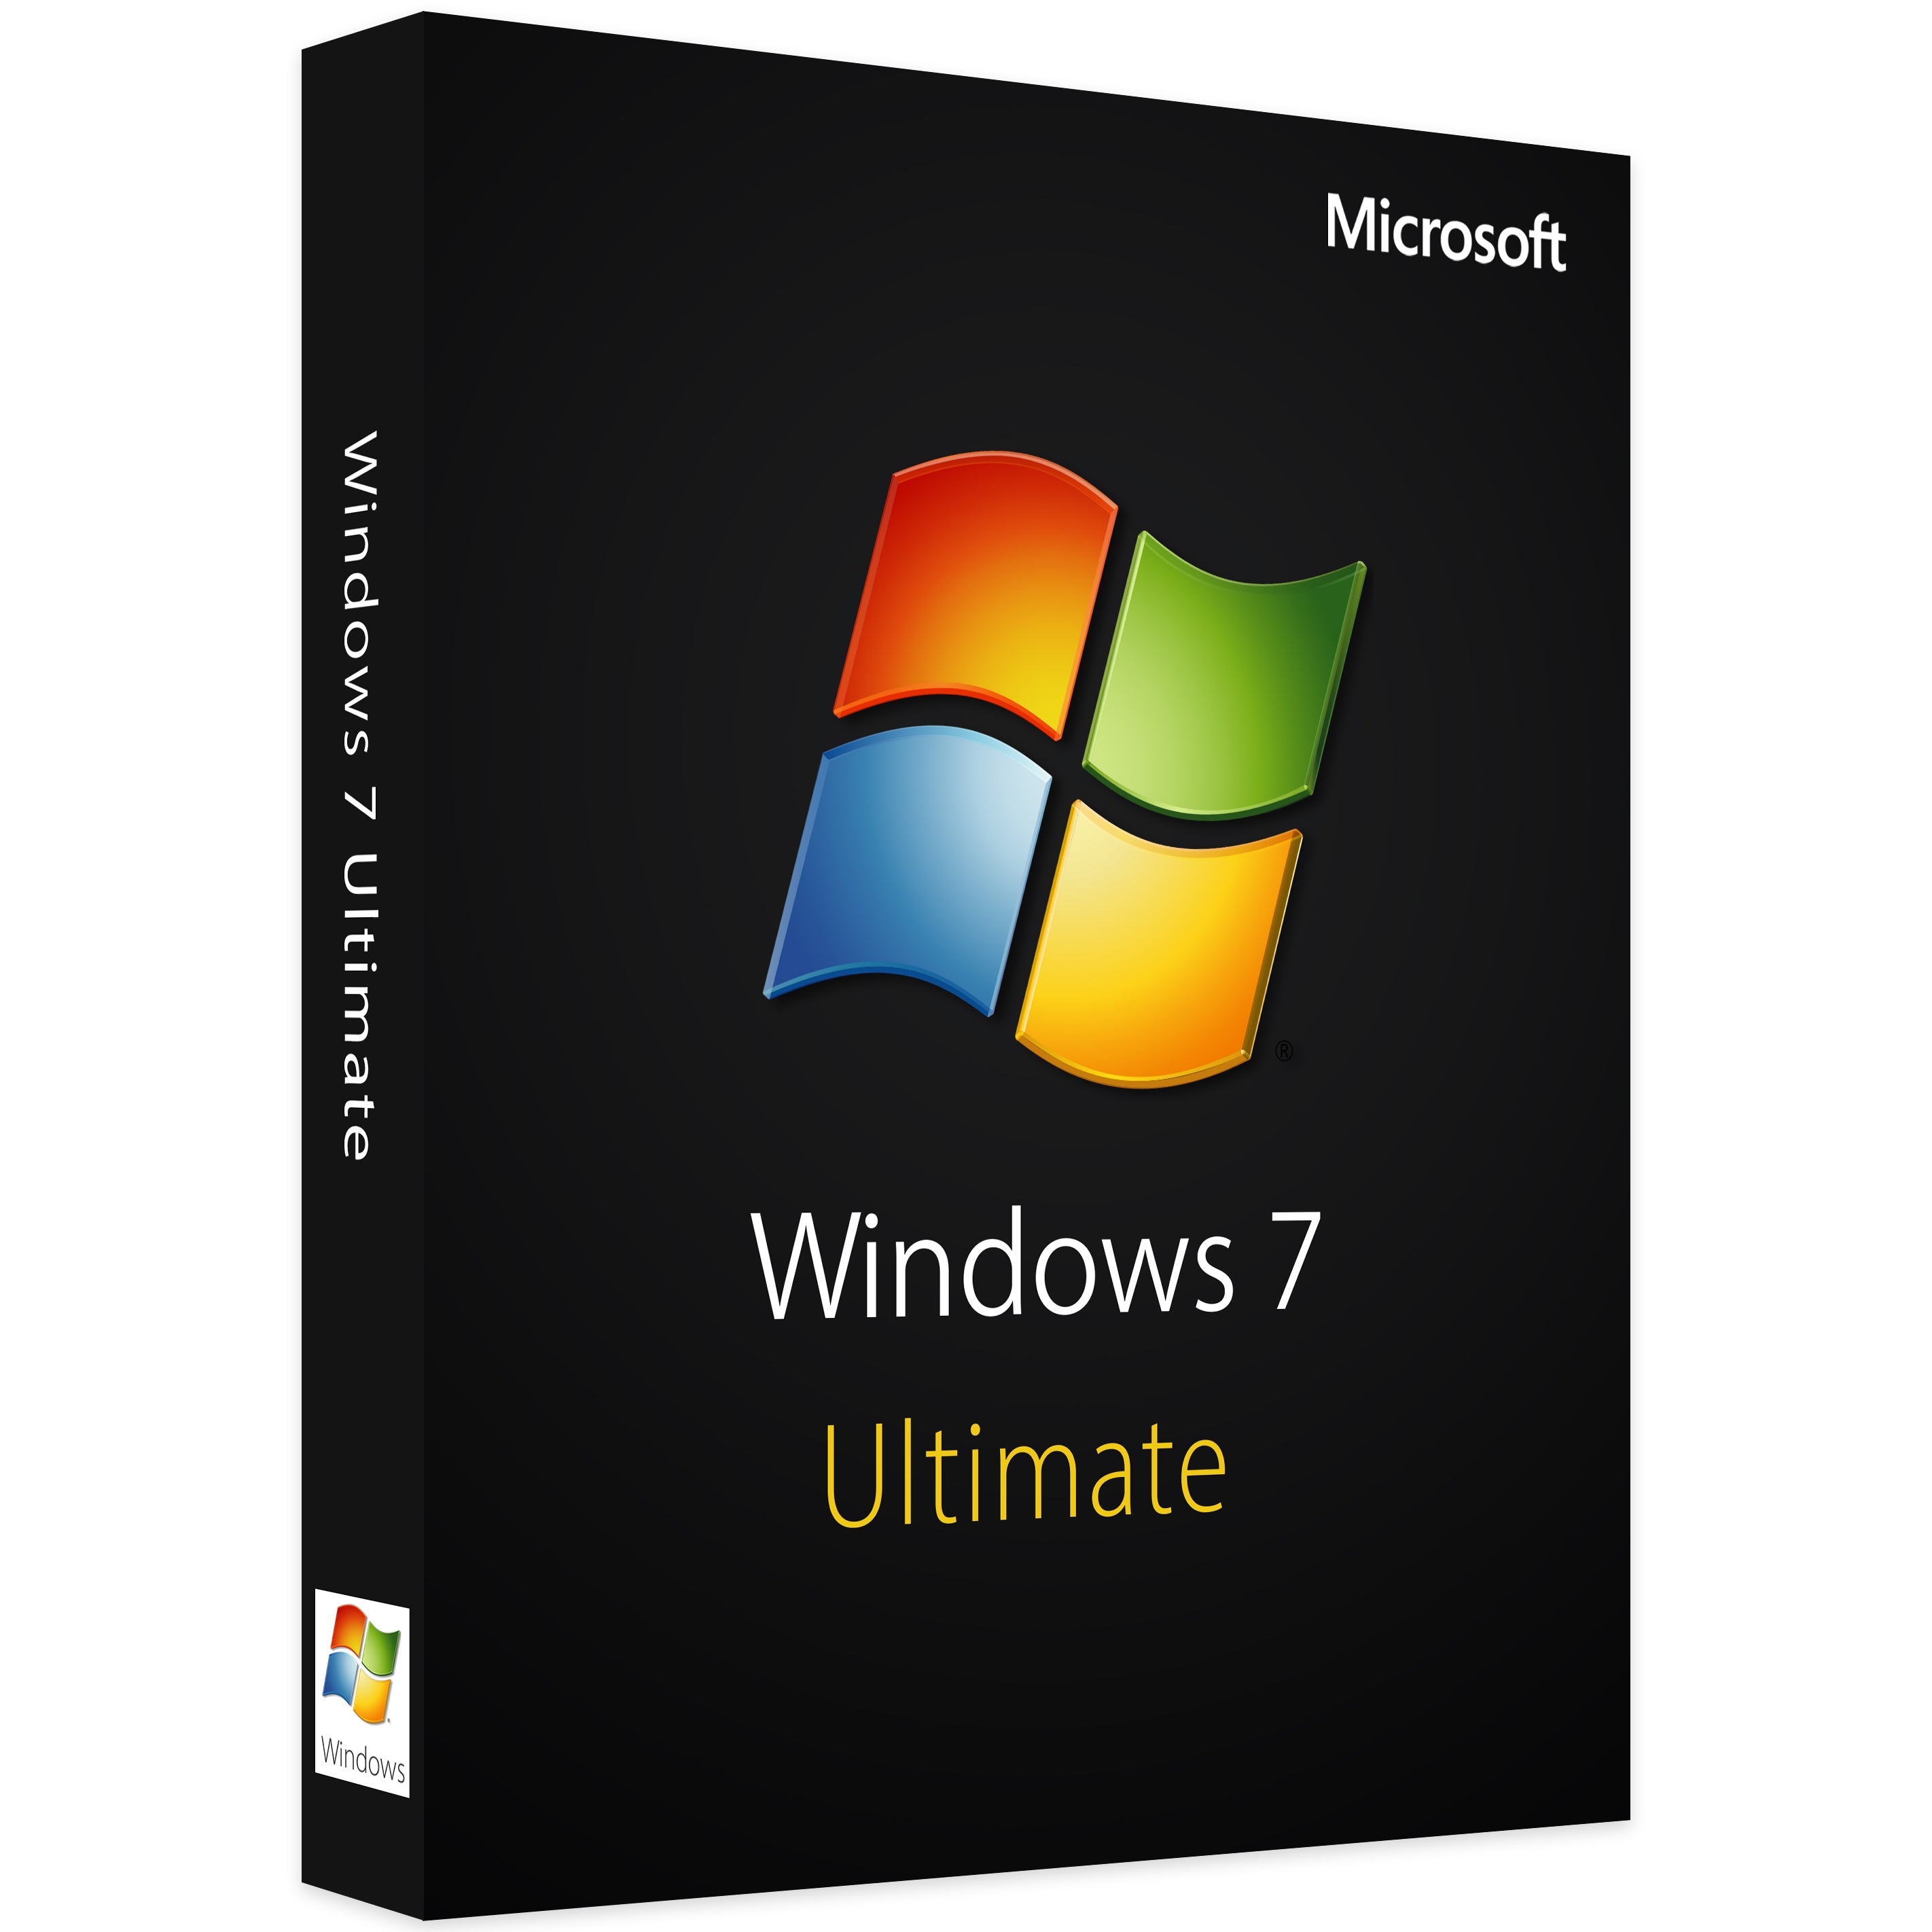 Microsoft Windows 7 Ultimate - 32/64 Bit Lifetime License 1PC